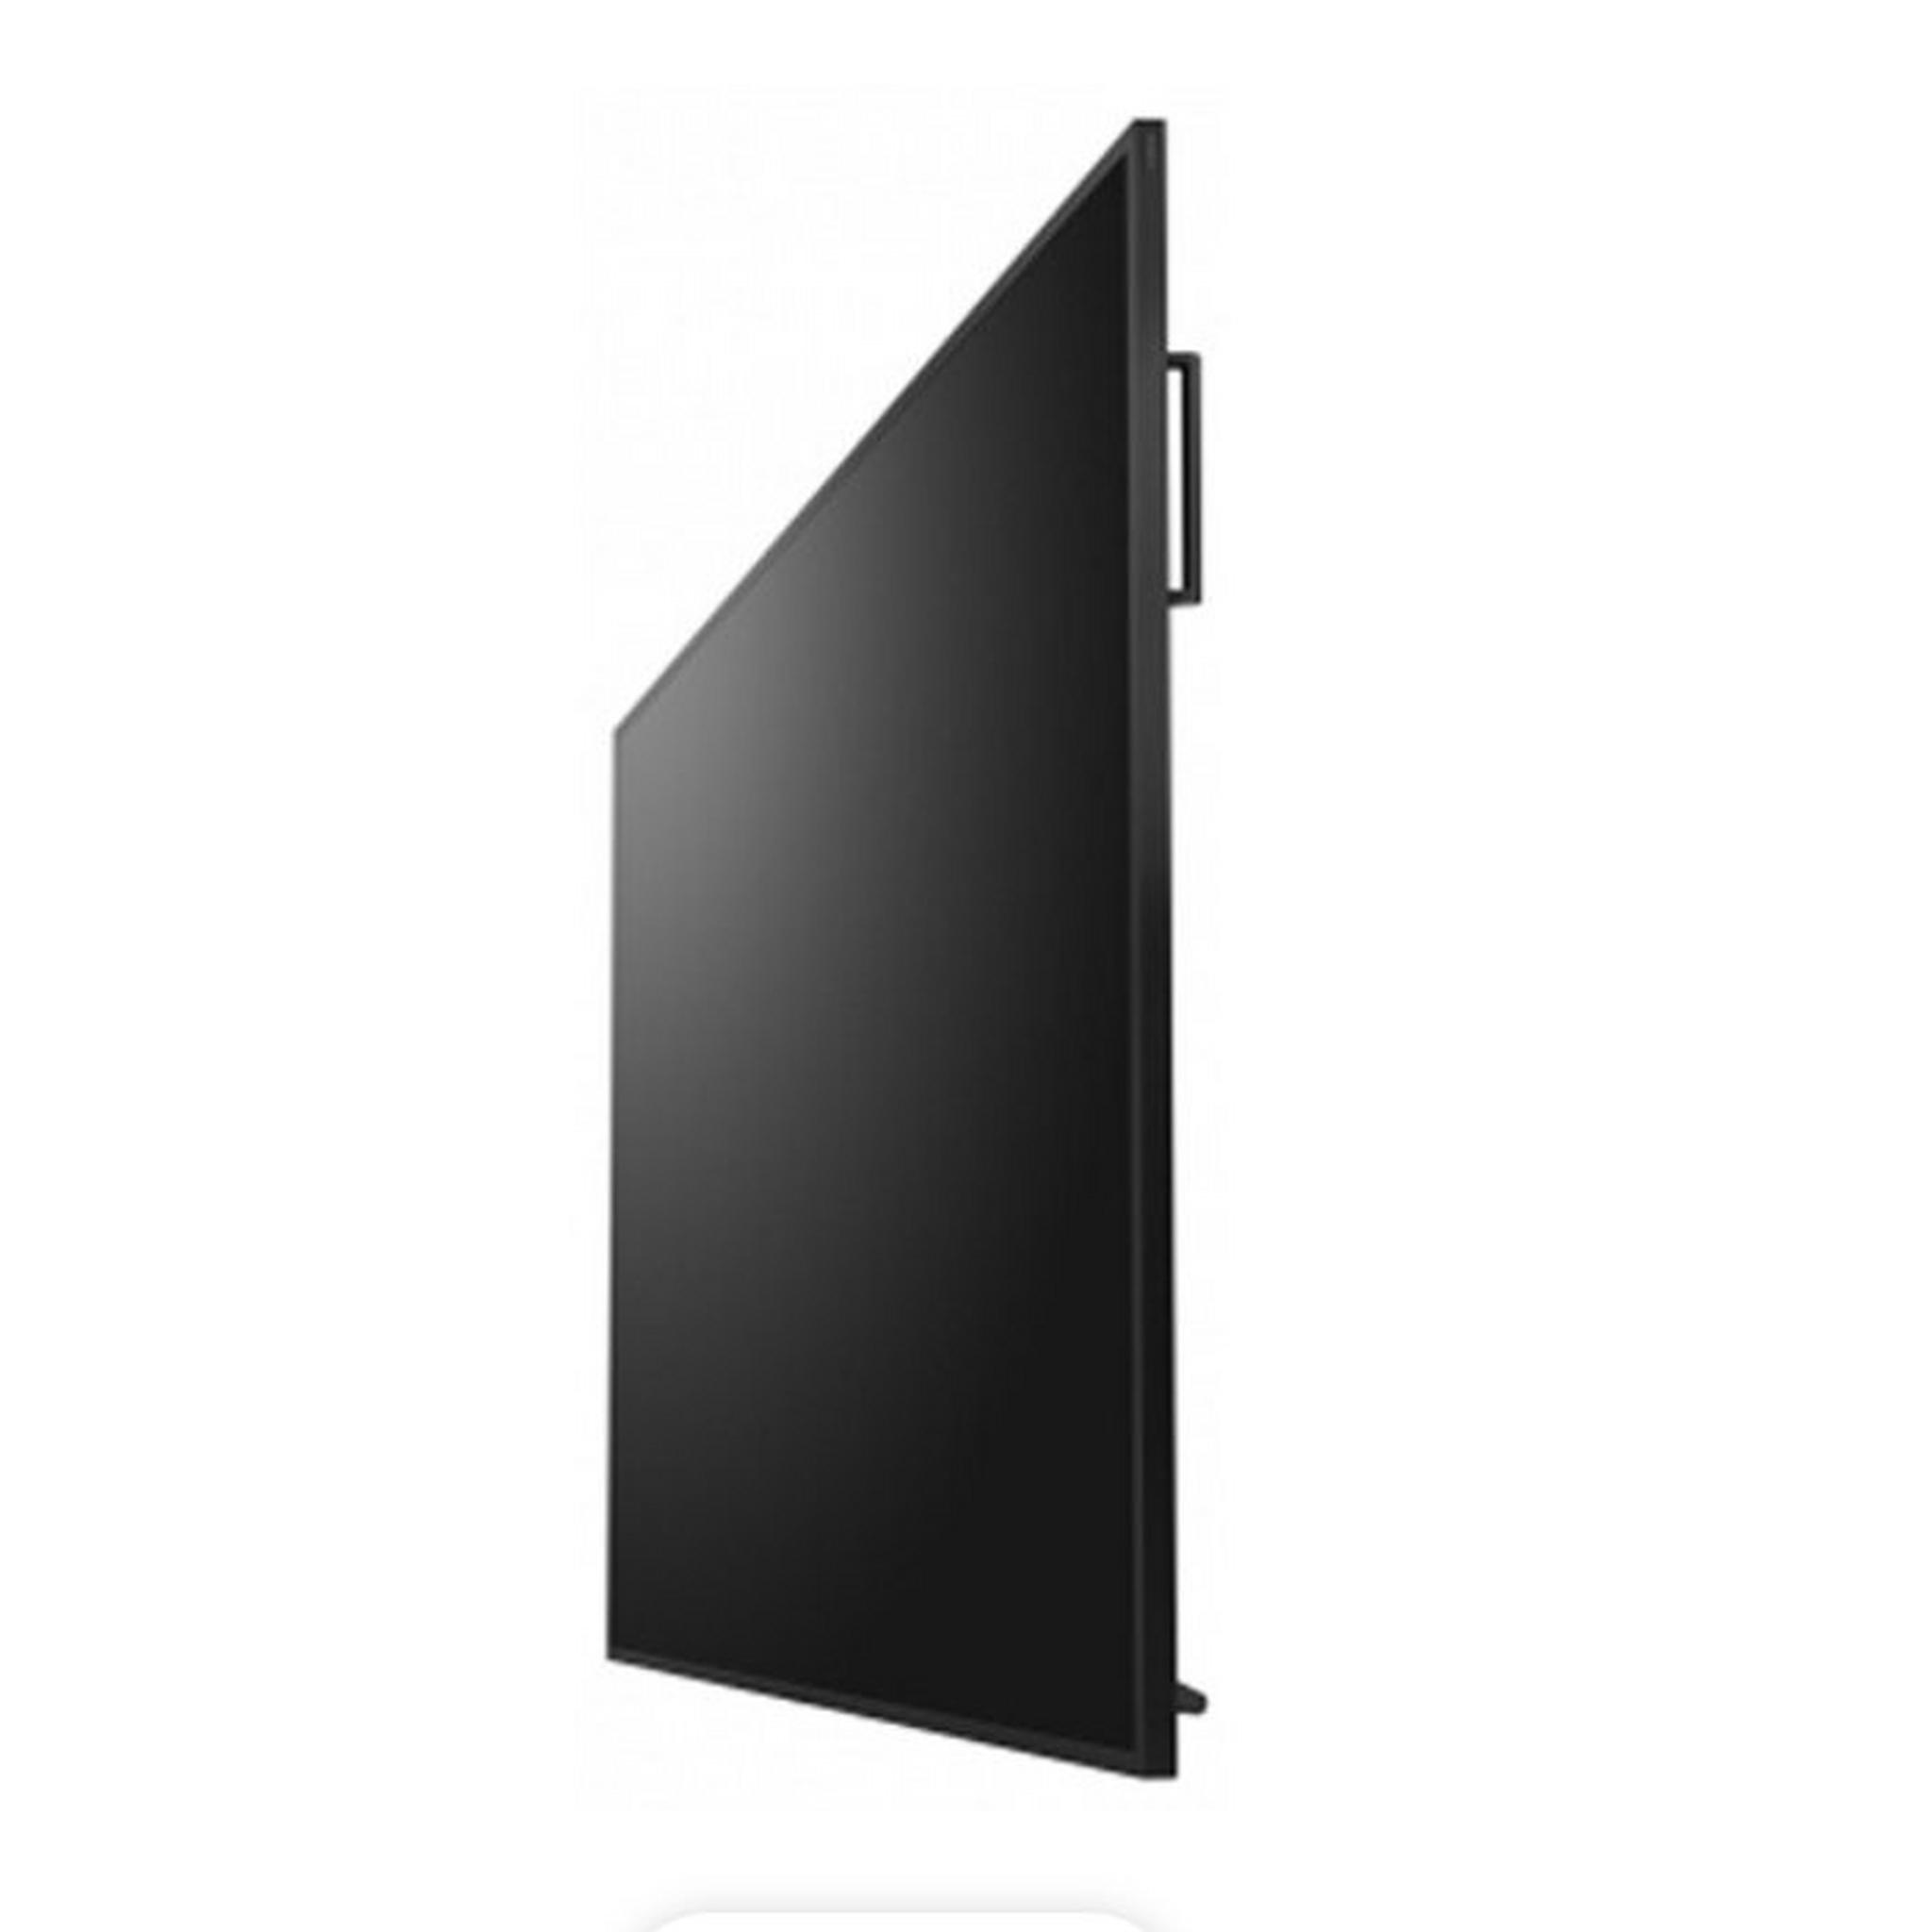 Sony BRAVIA 98-inch UHD 4K HDR Smart LED TV FW-98BZ50L - Black